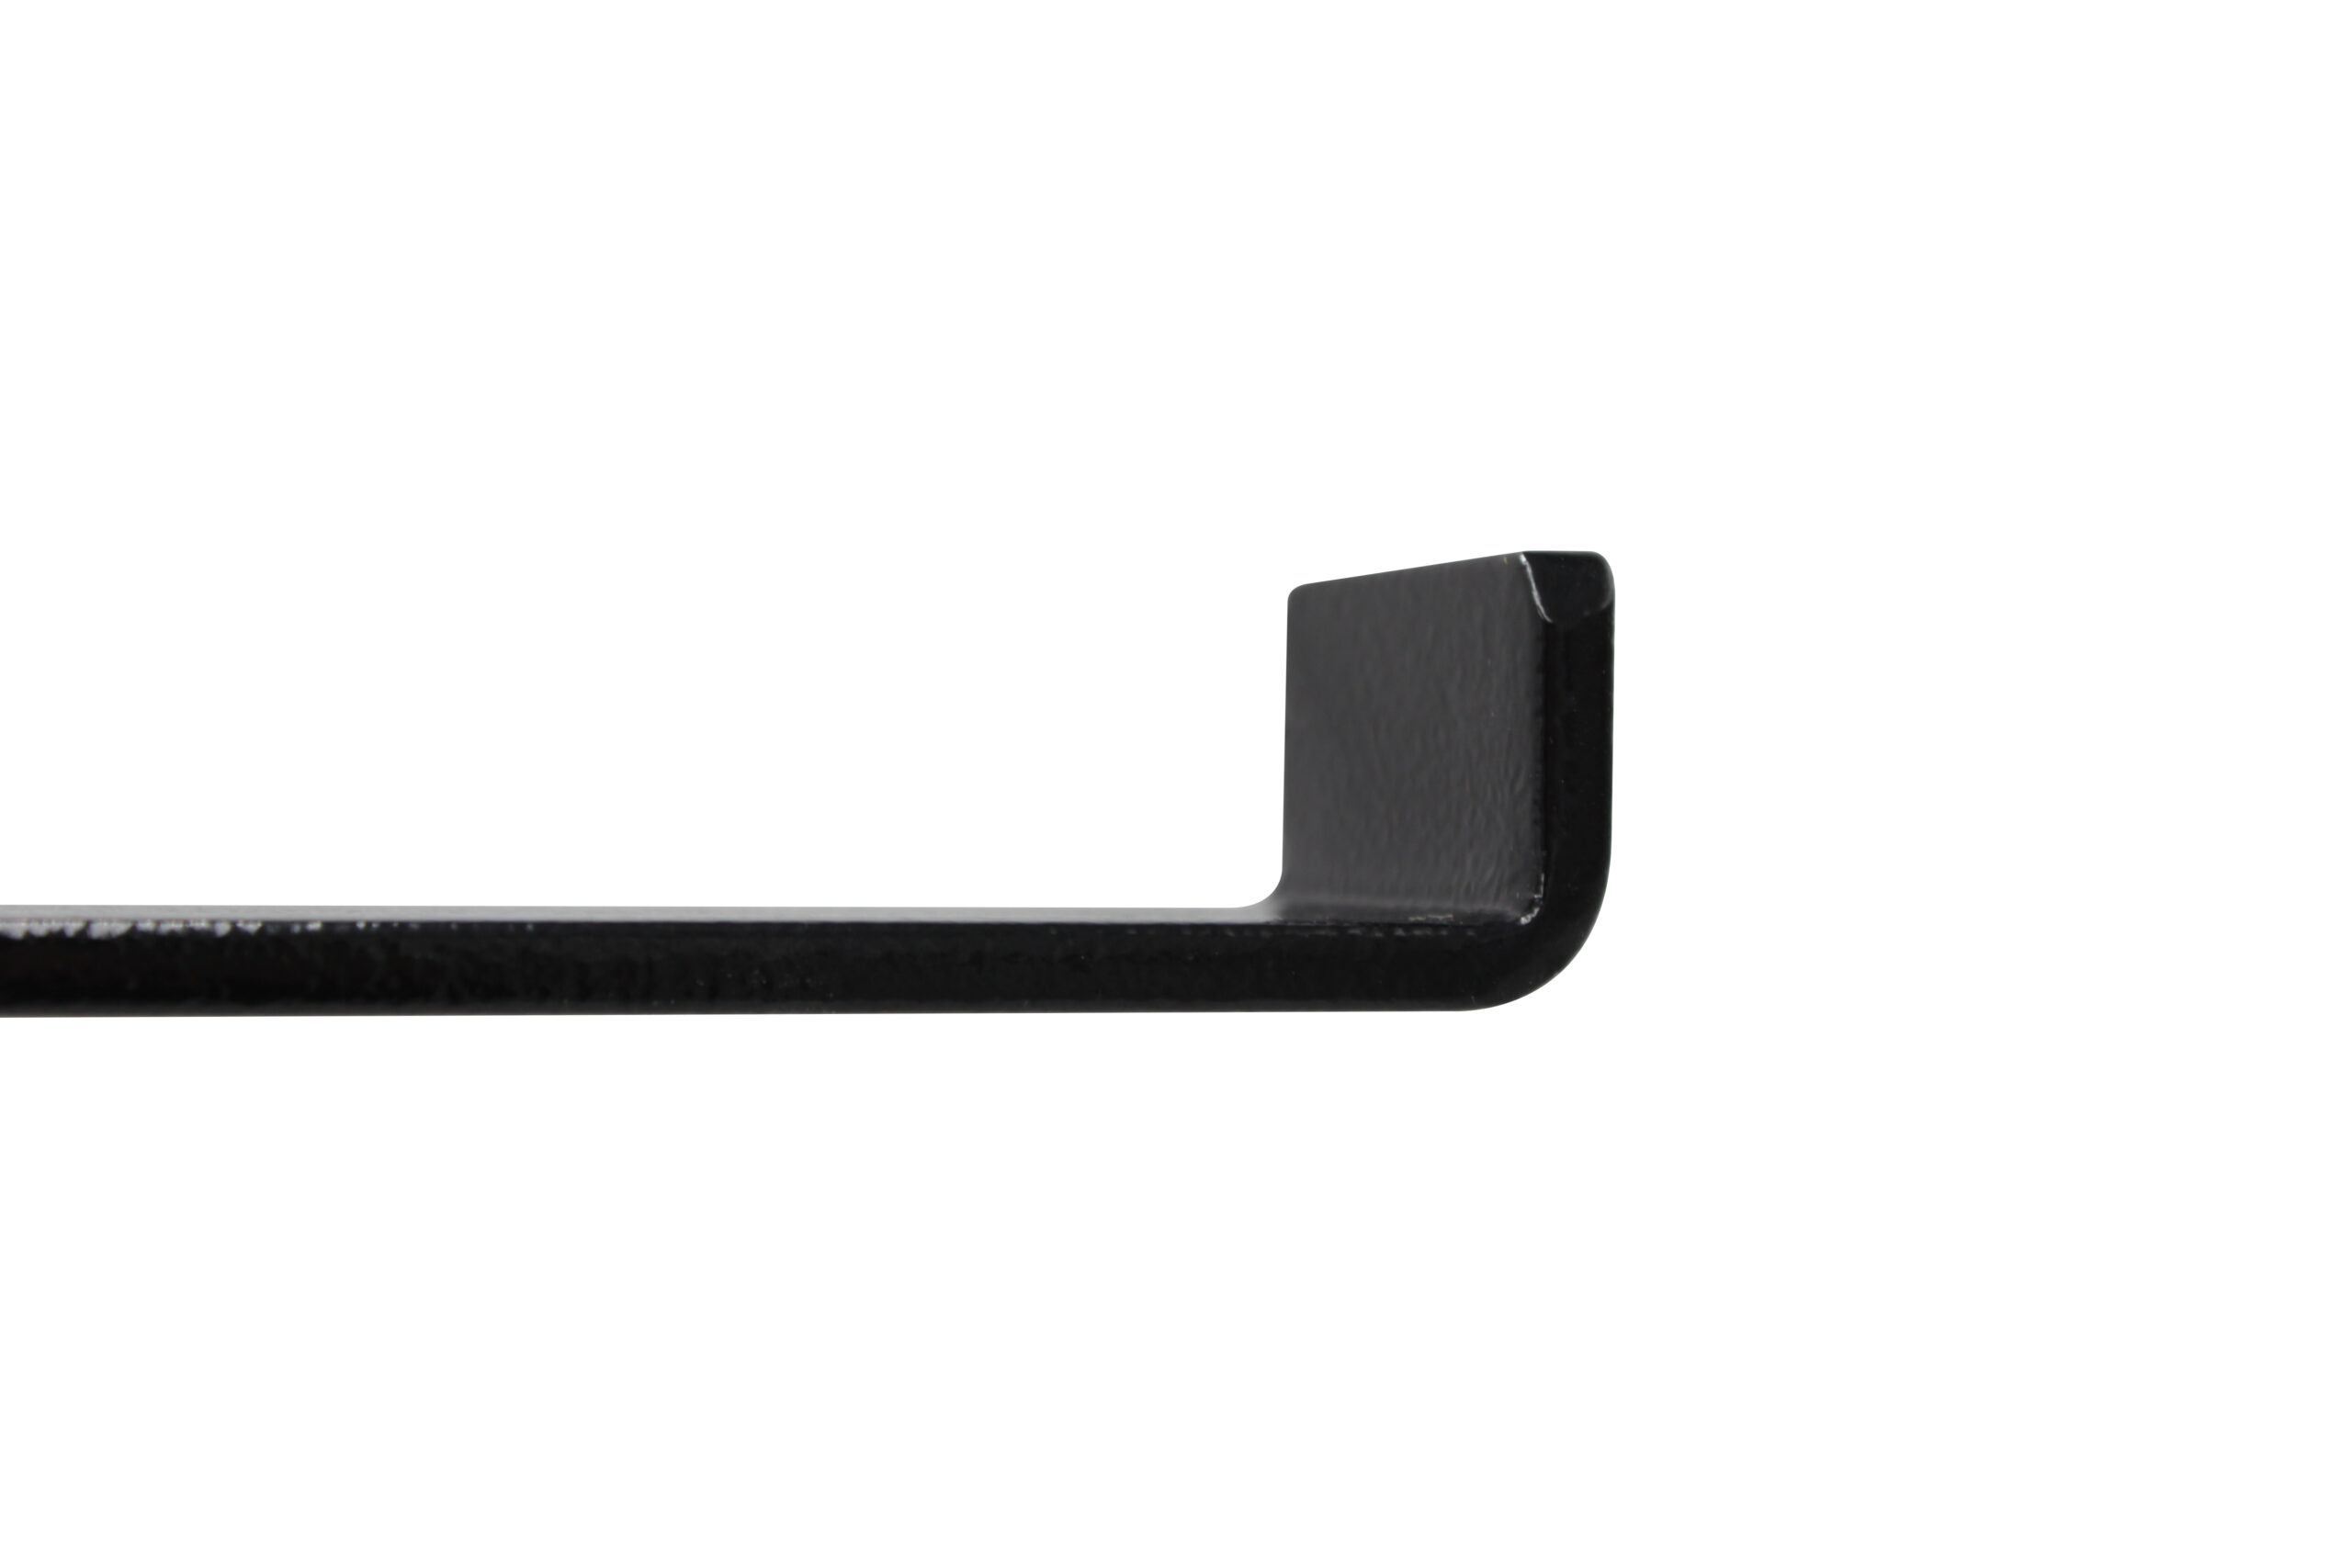 Right Angle Hook Shelf Bracket - Lipped Edge Secures Shelf - Modern Design